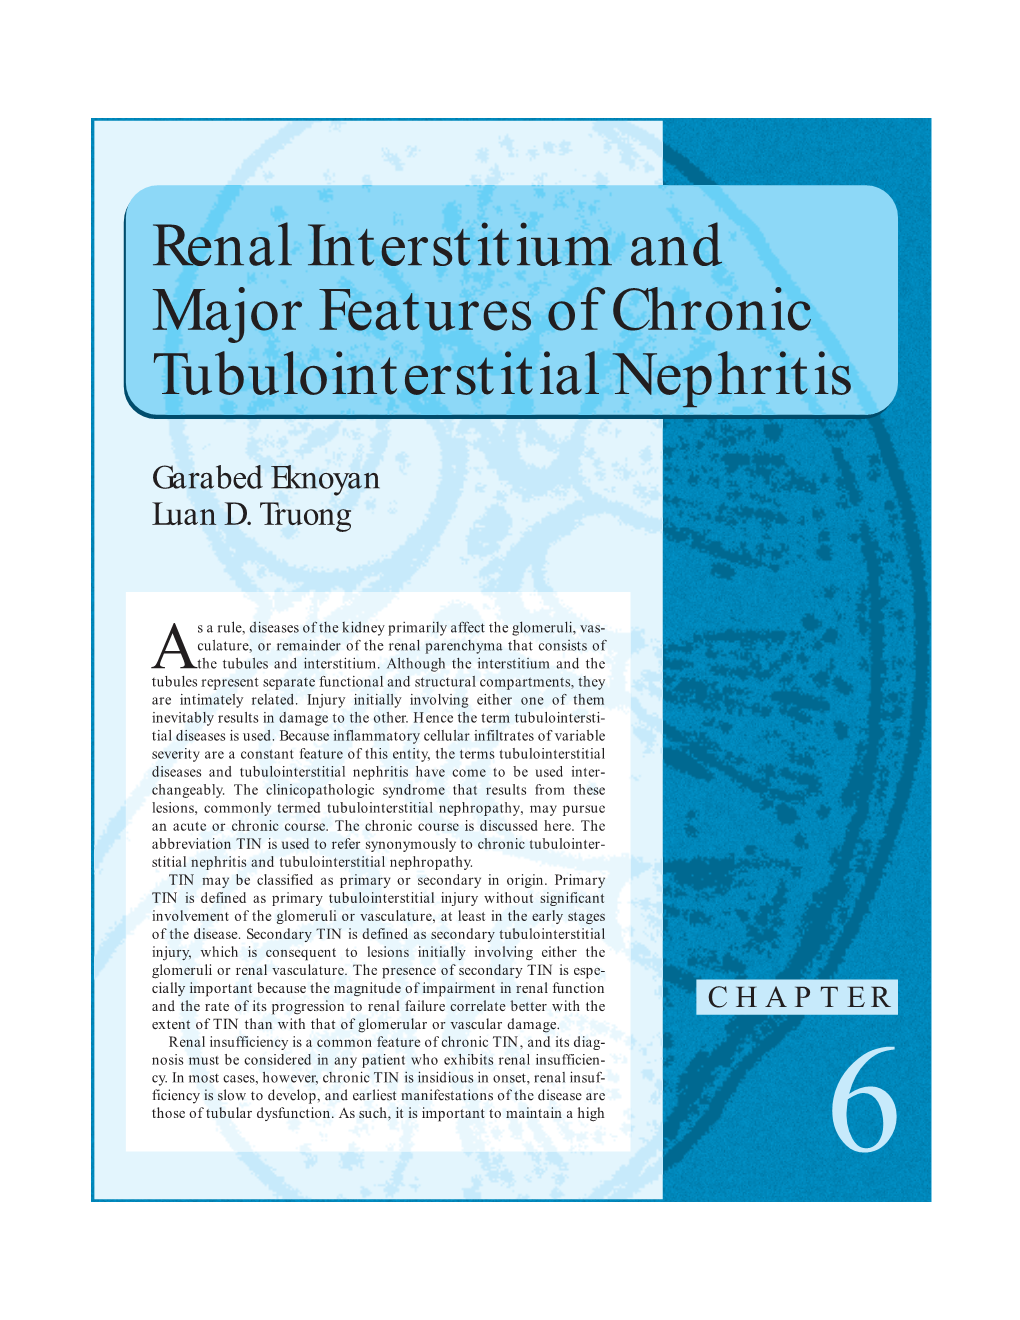 Renal Interstitium and Major Features of Chronic Tubulointerstitial Nephritis